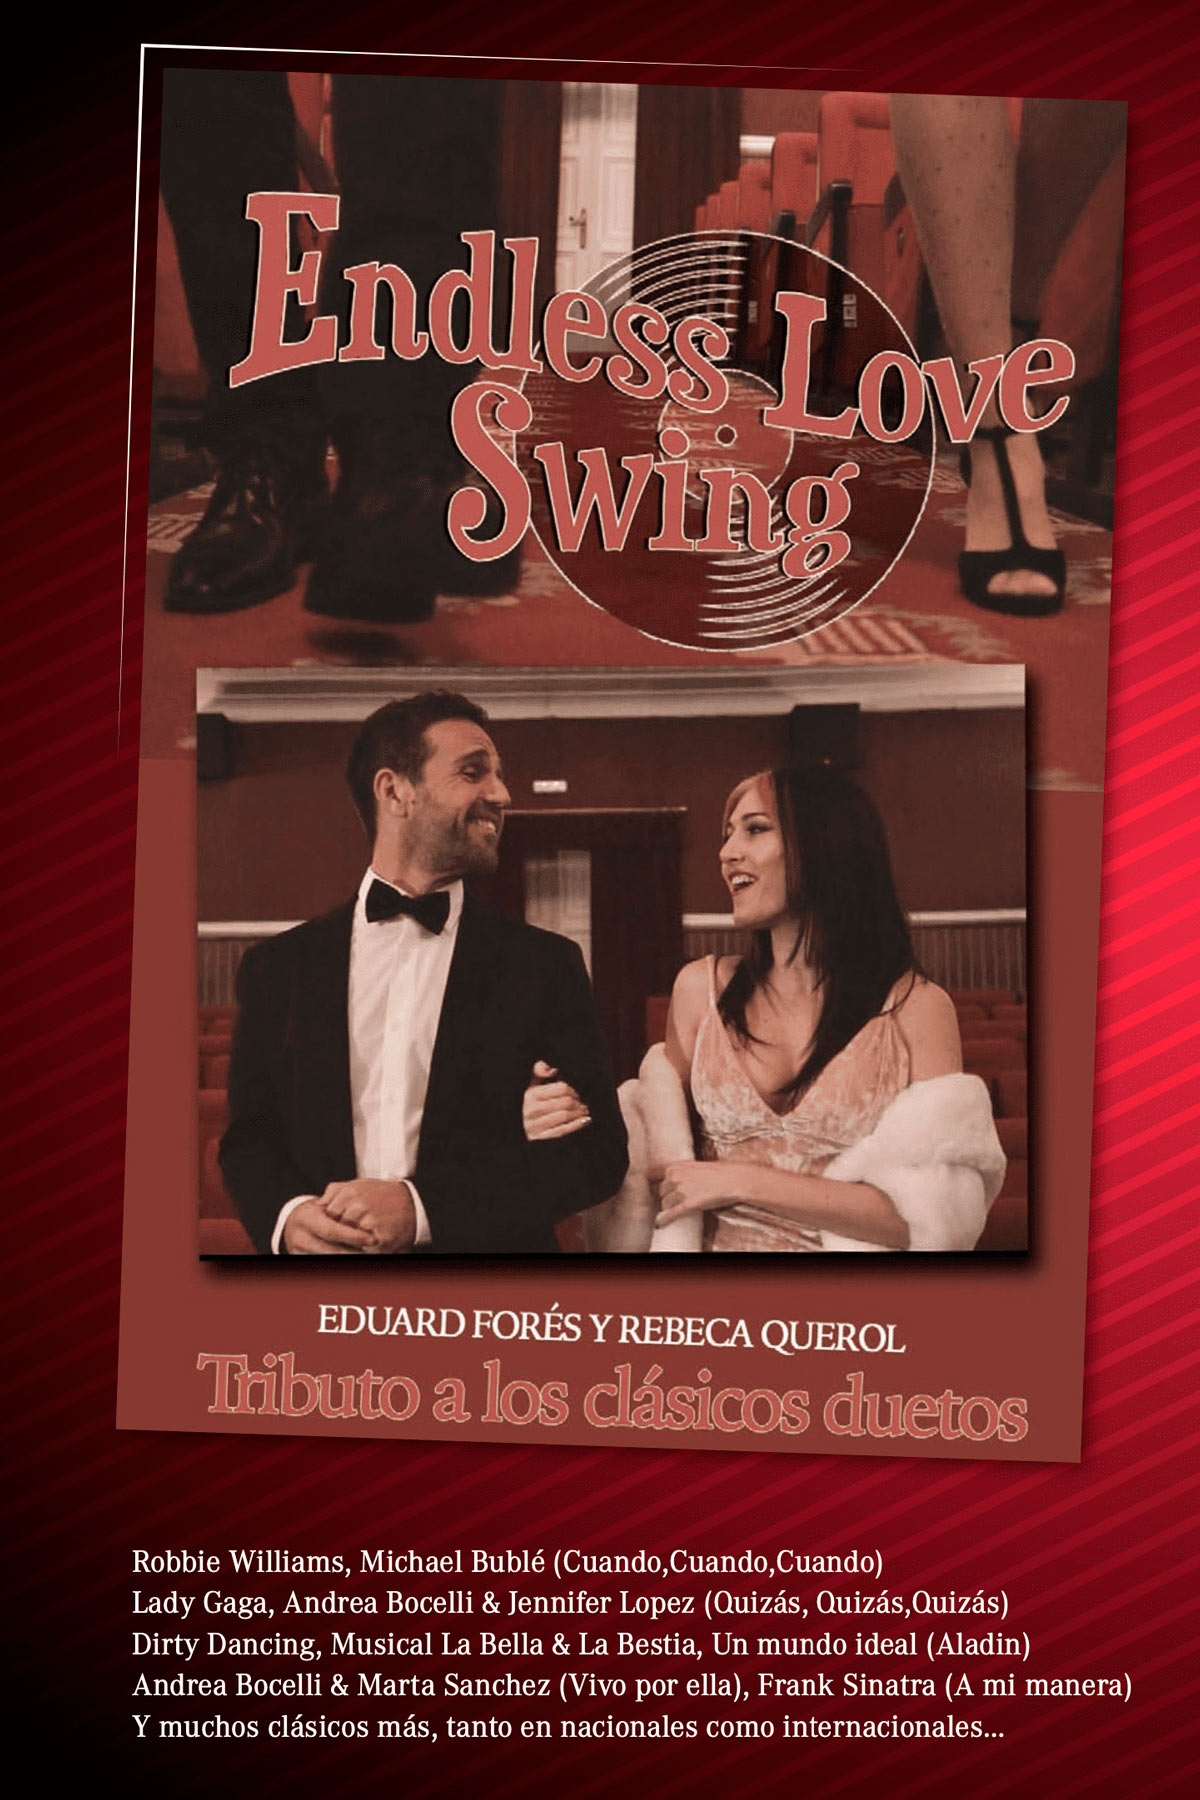 Endless love swing